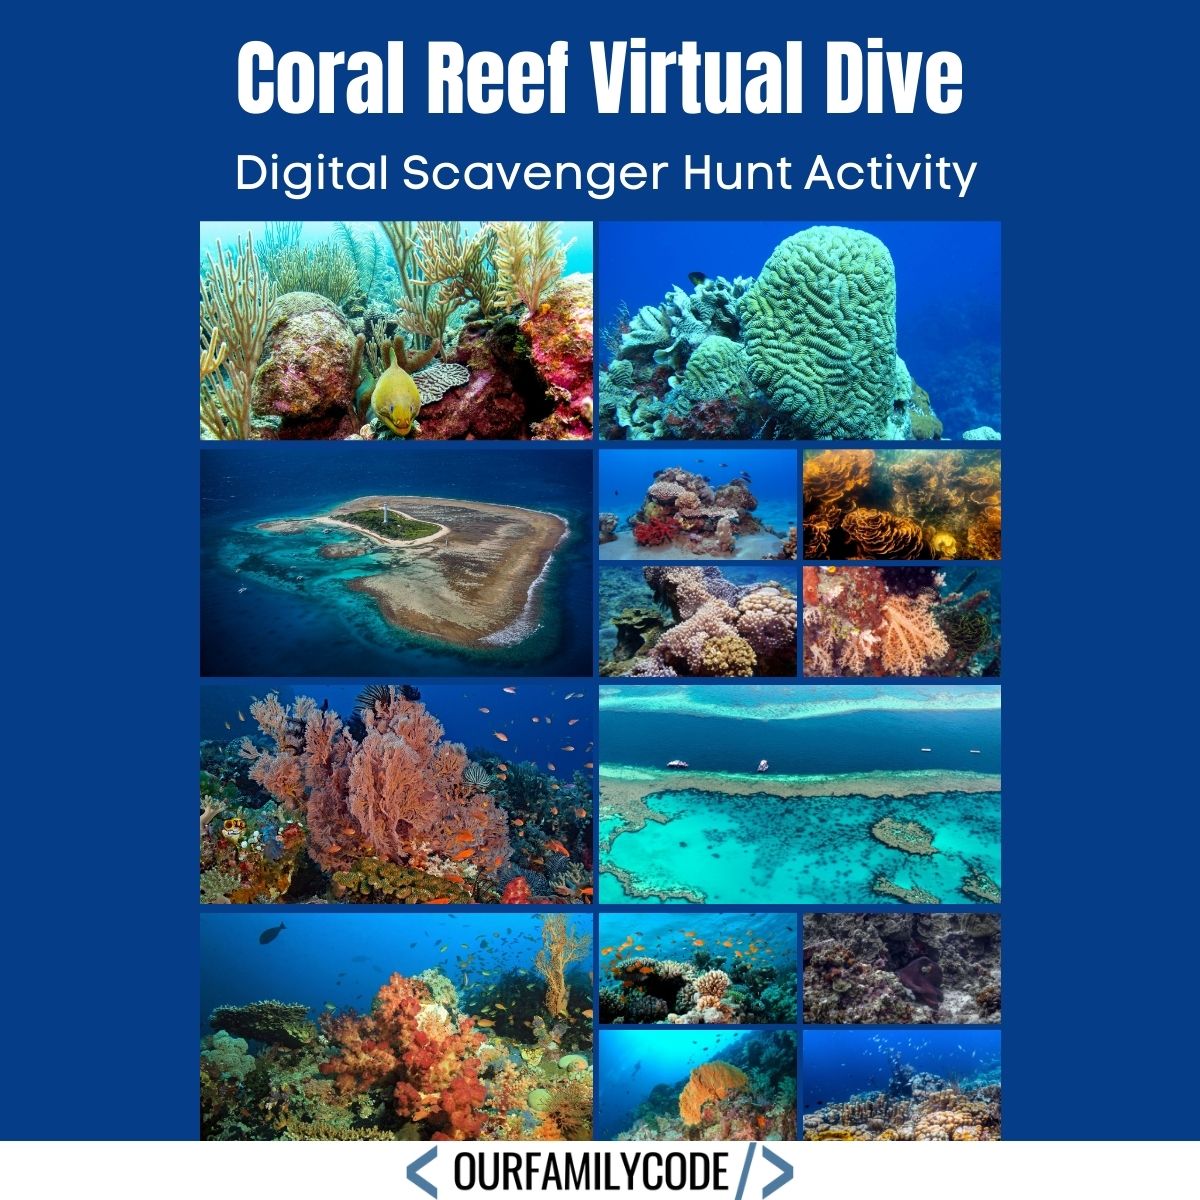 Coral Reef Virtual Dive blog post image